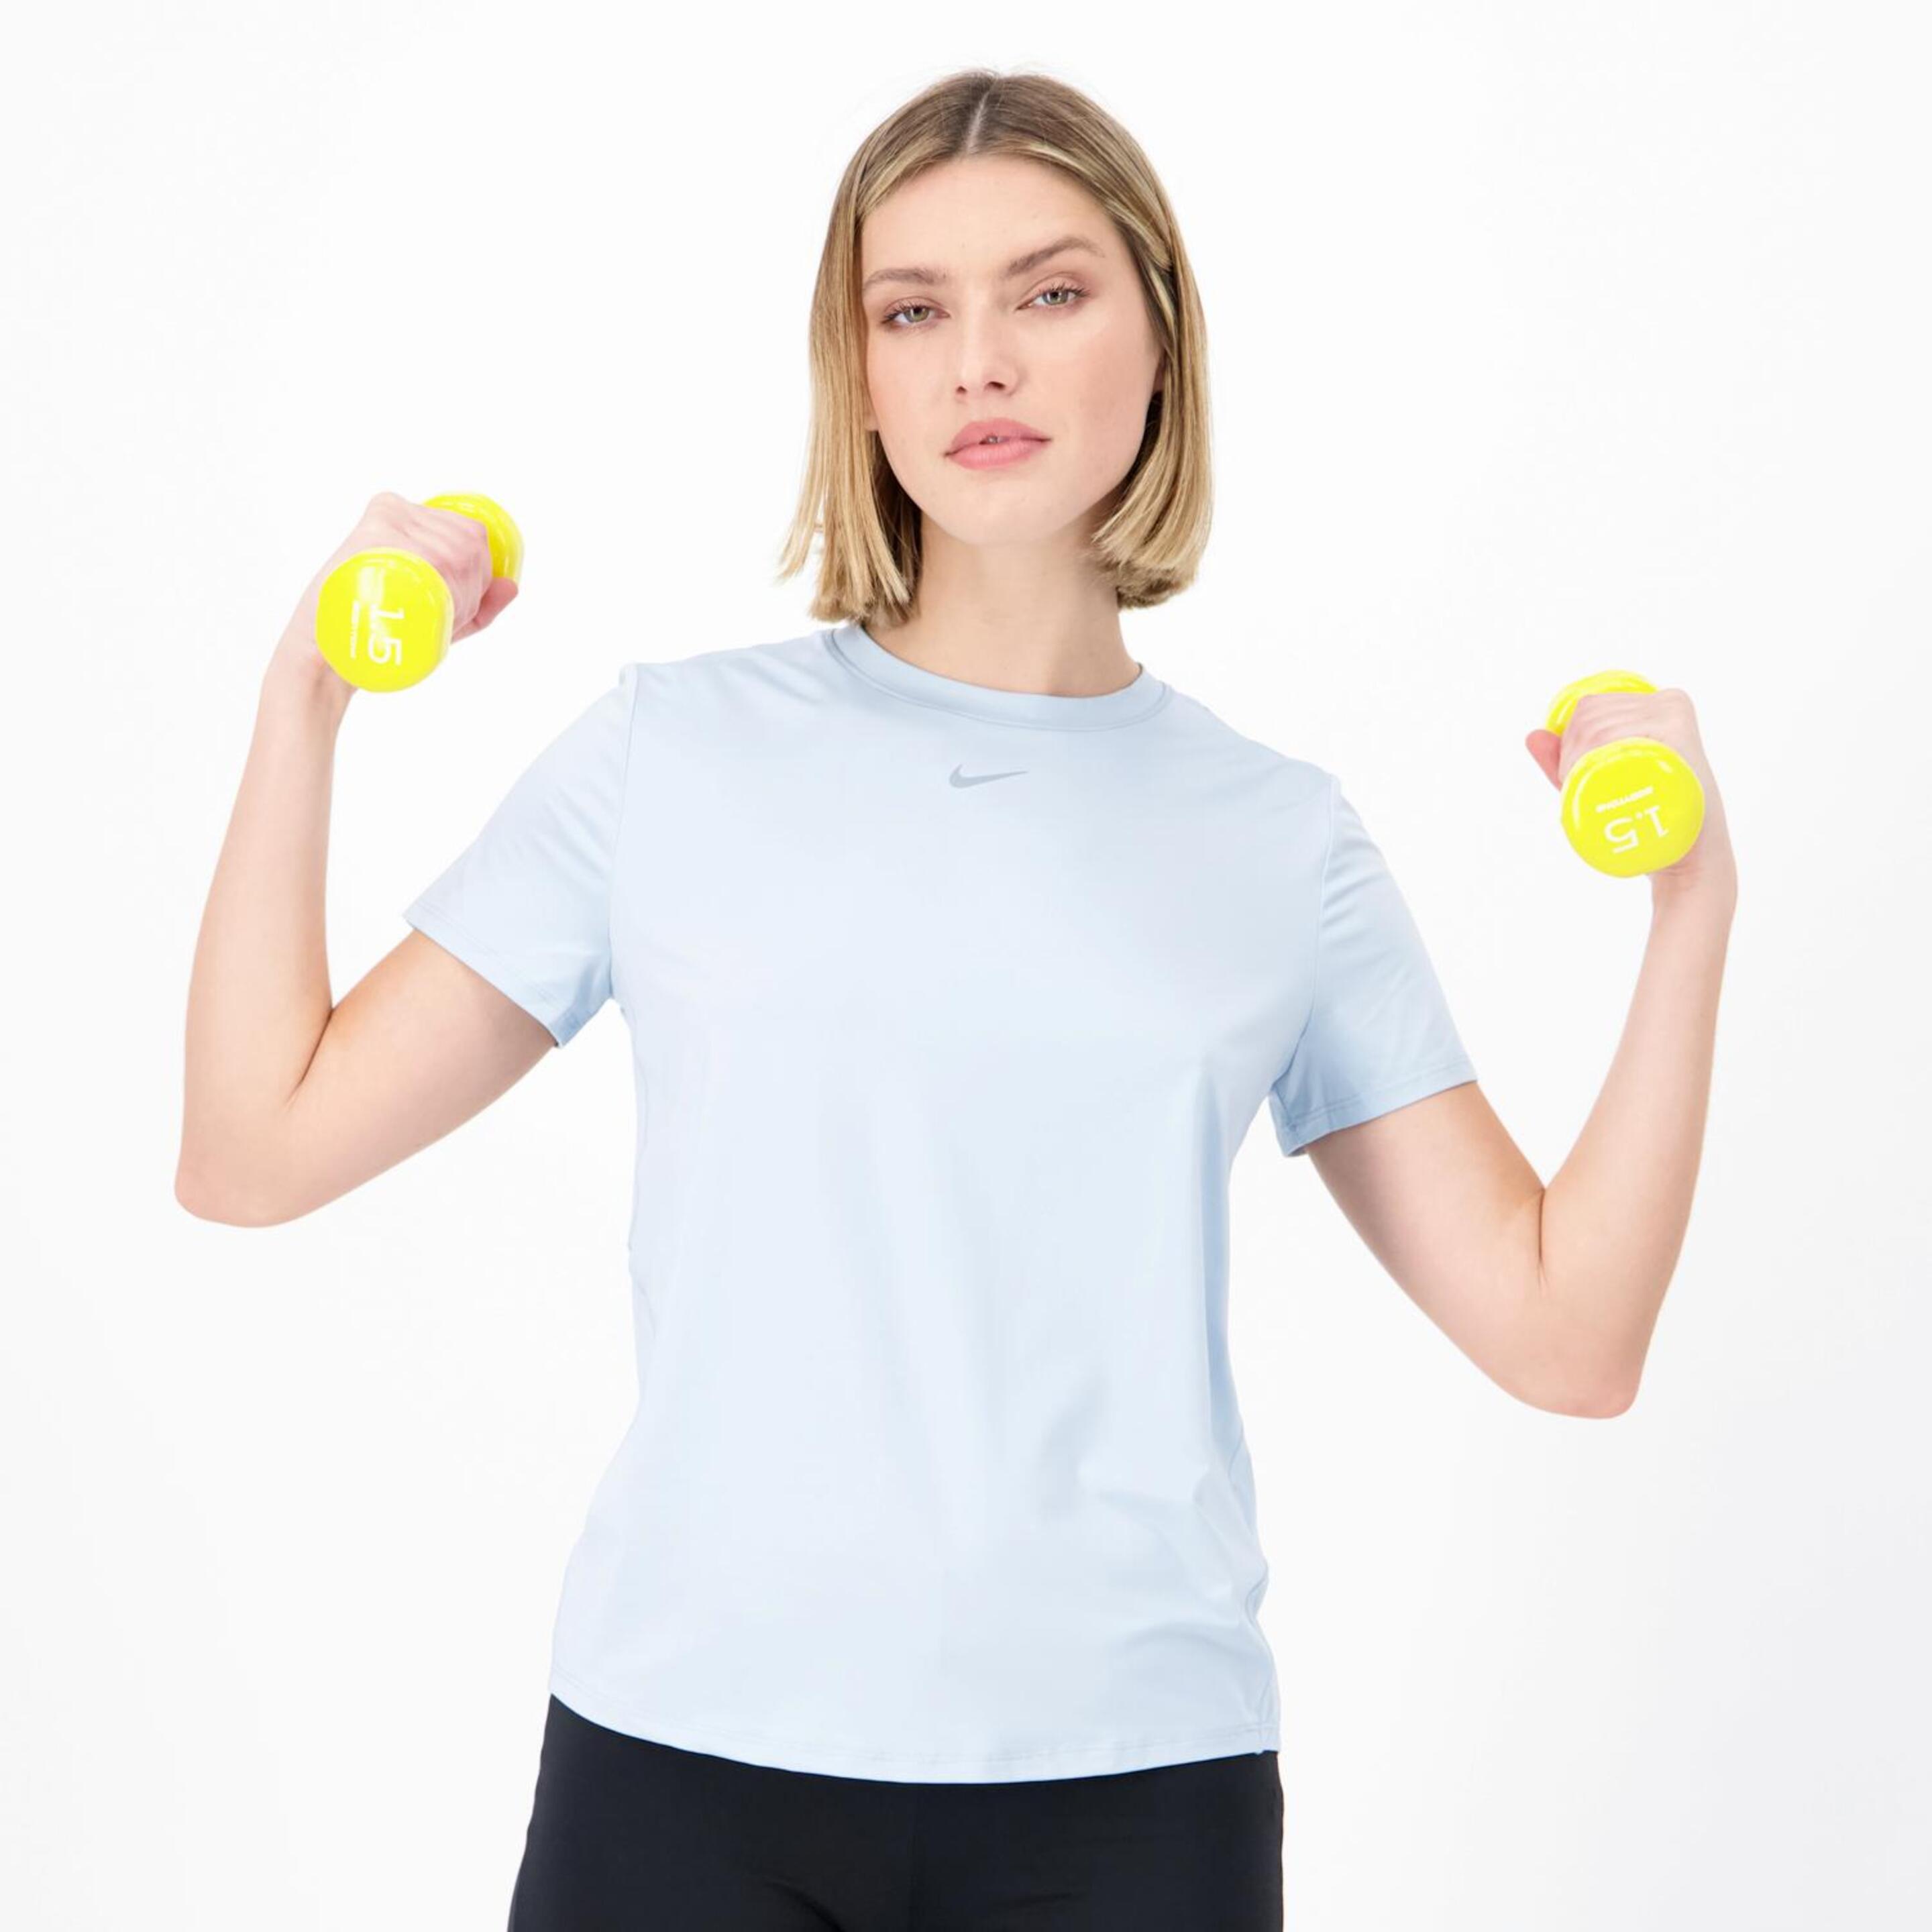 Nike One - azul - Camiseta Fitness Mujer